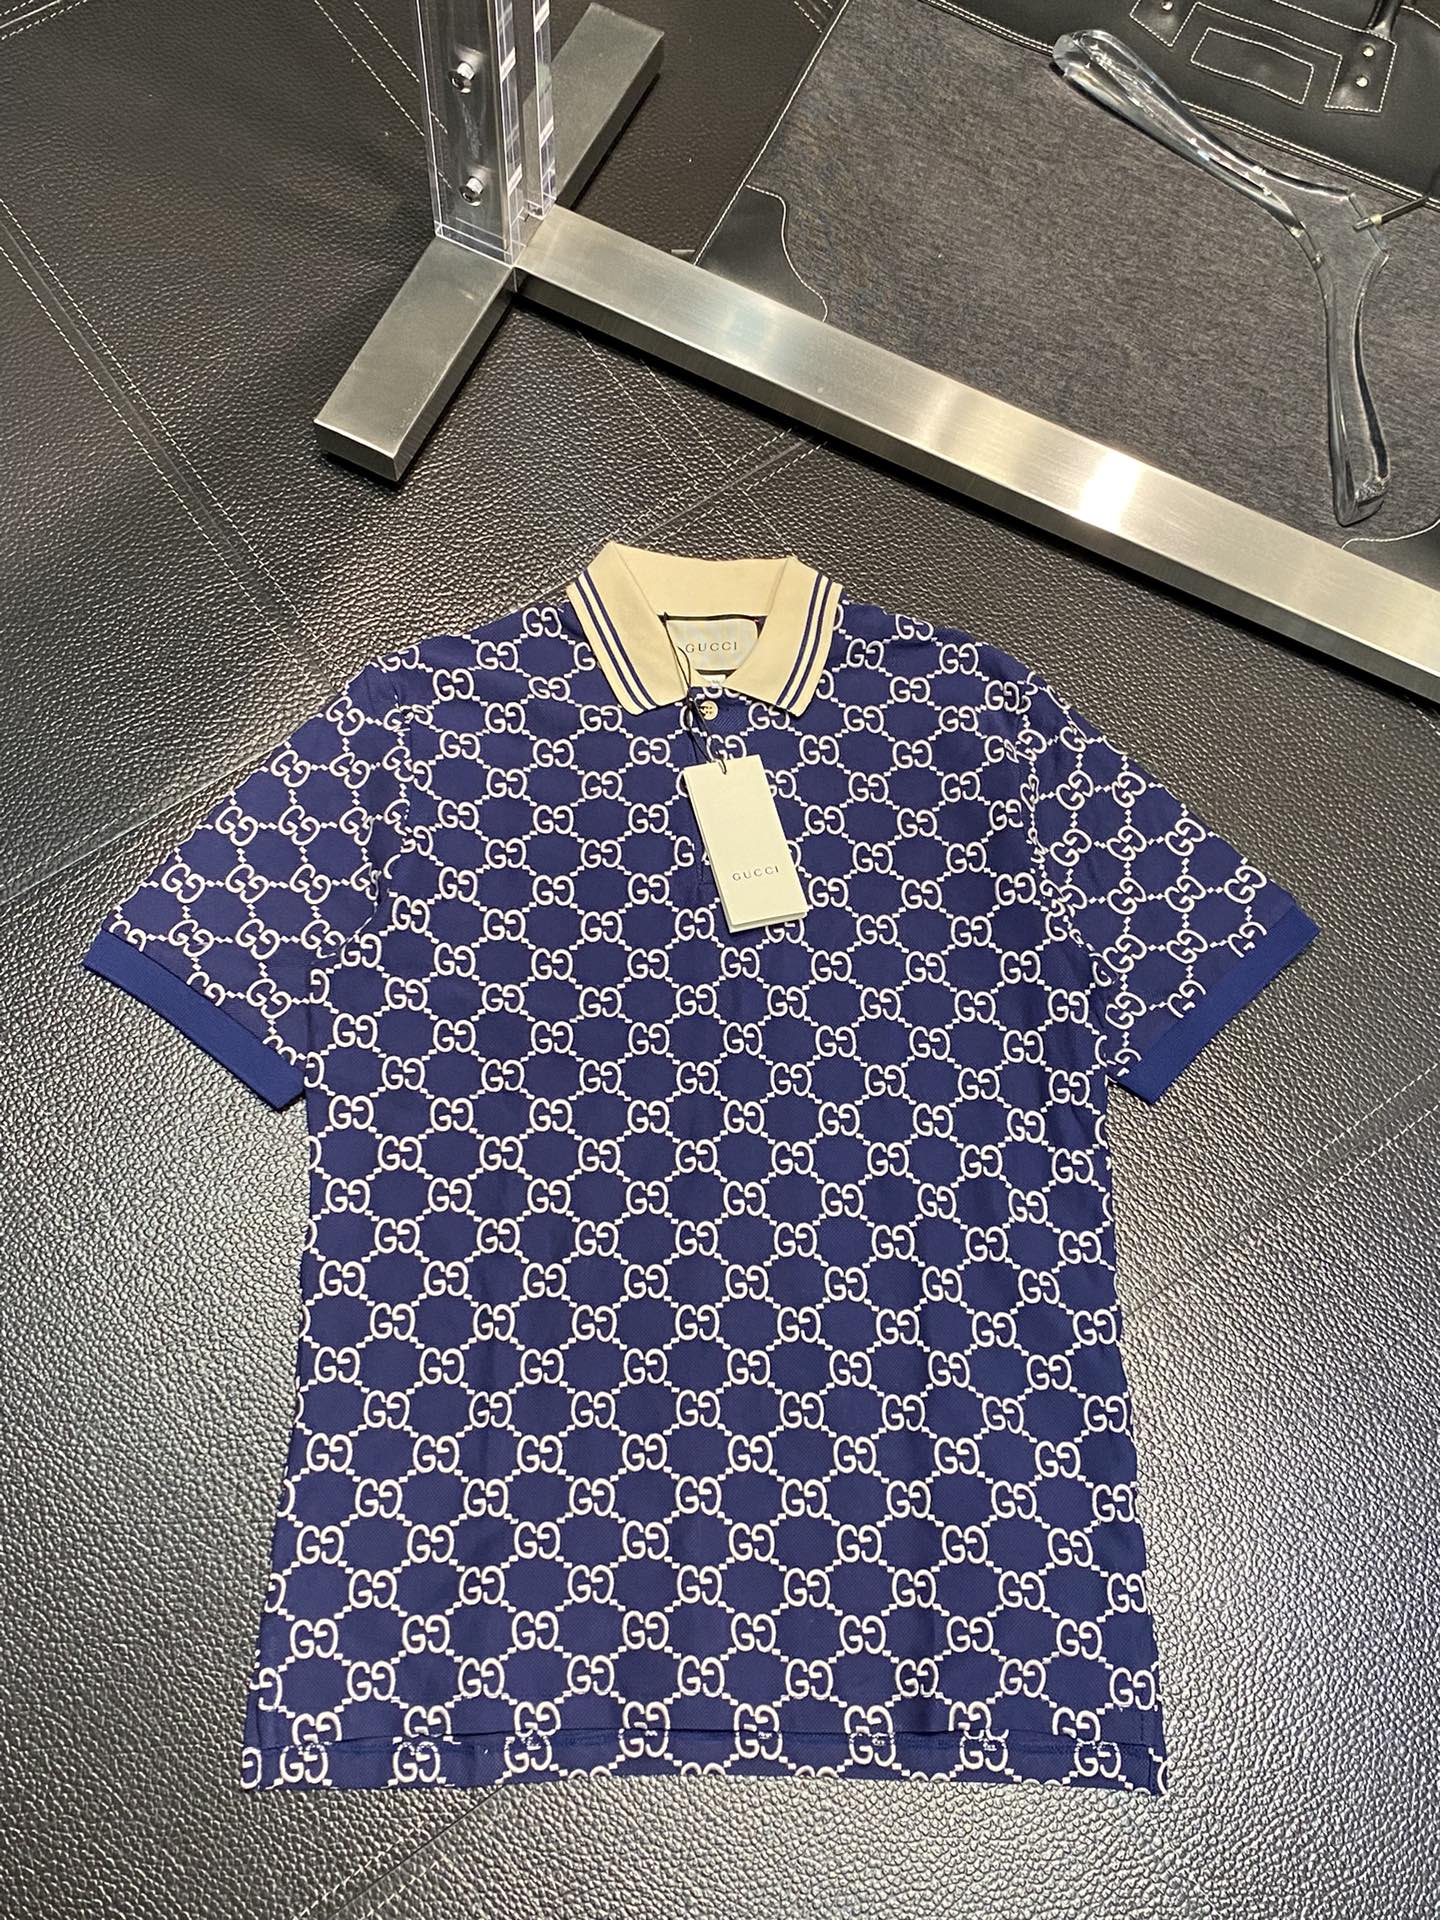 Gucci Best
 Clothing Polo T-Shirt Shop Cheap High Quality 1:1 Replica
 Men Fashion Short Sleeve